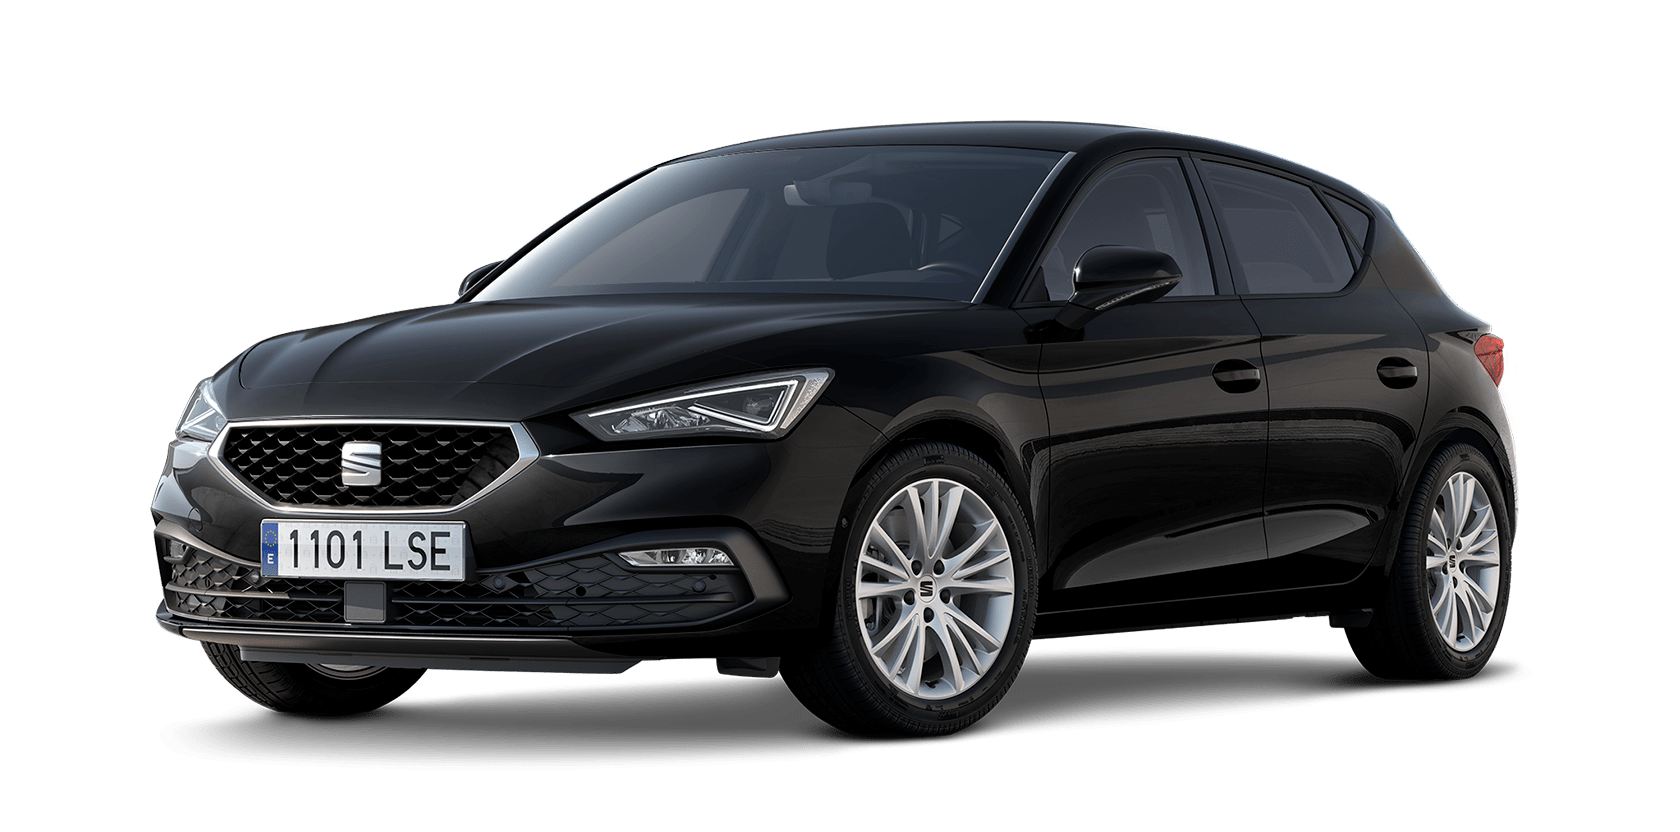 seat-leon-5d-midnight-black-style-trim-colour-alloy-wheels